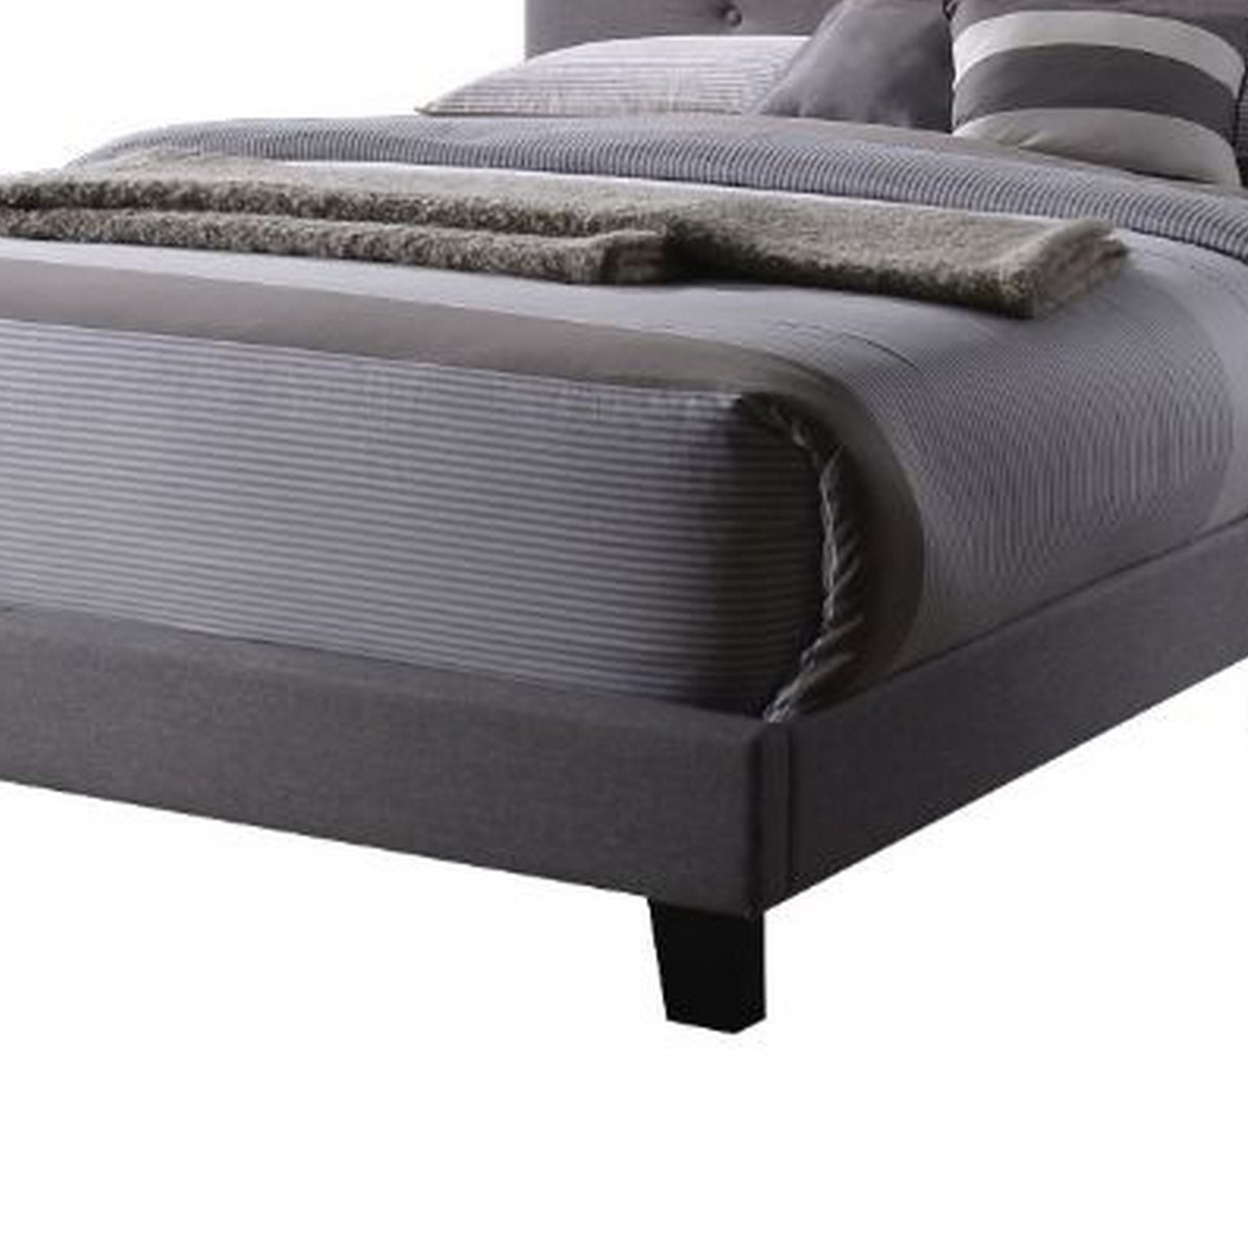 ACME Venacha Upholstered Platform Queen Bed, Gray Fabric - image 3 of 6